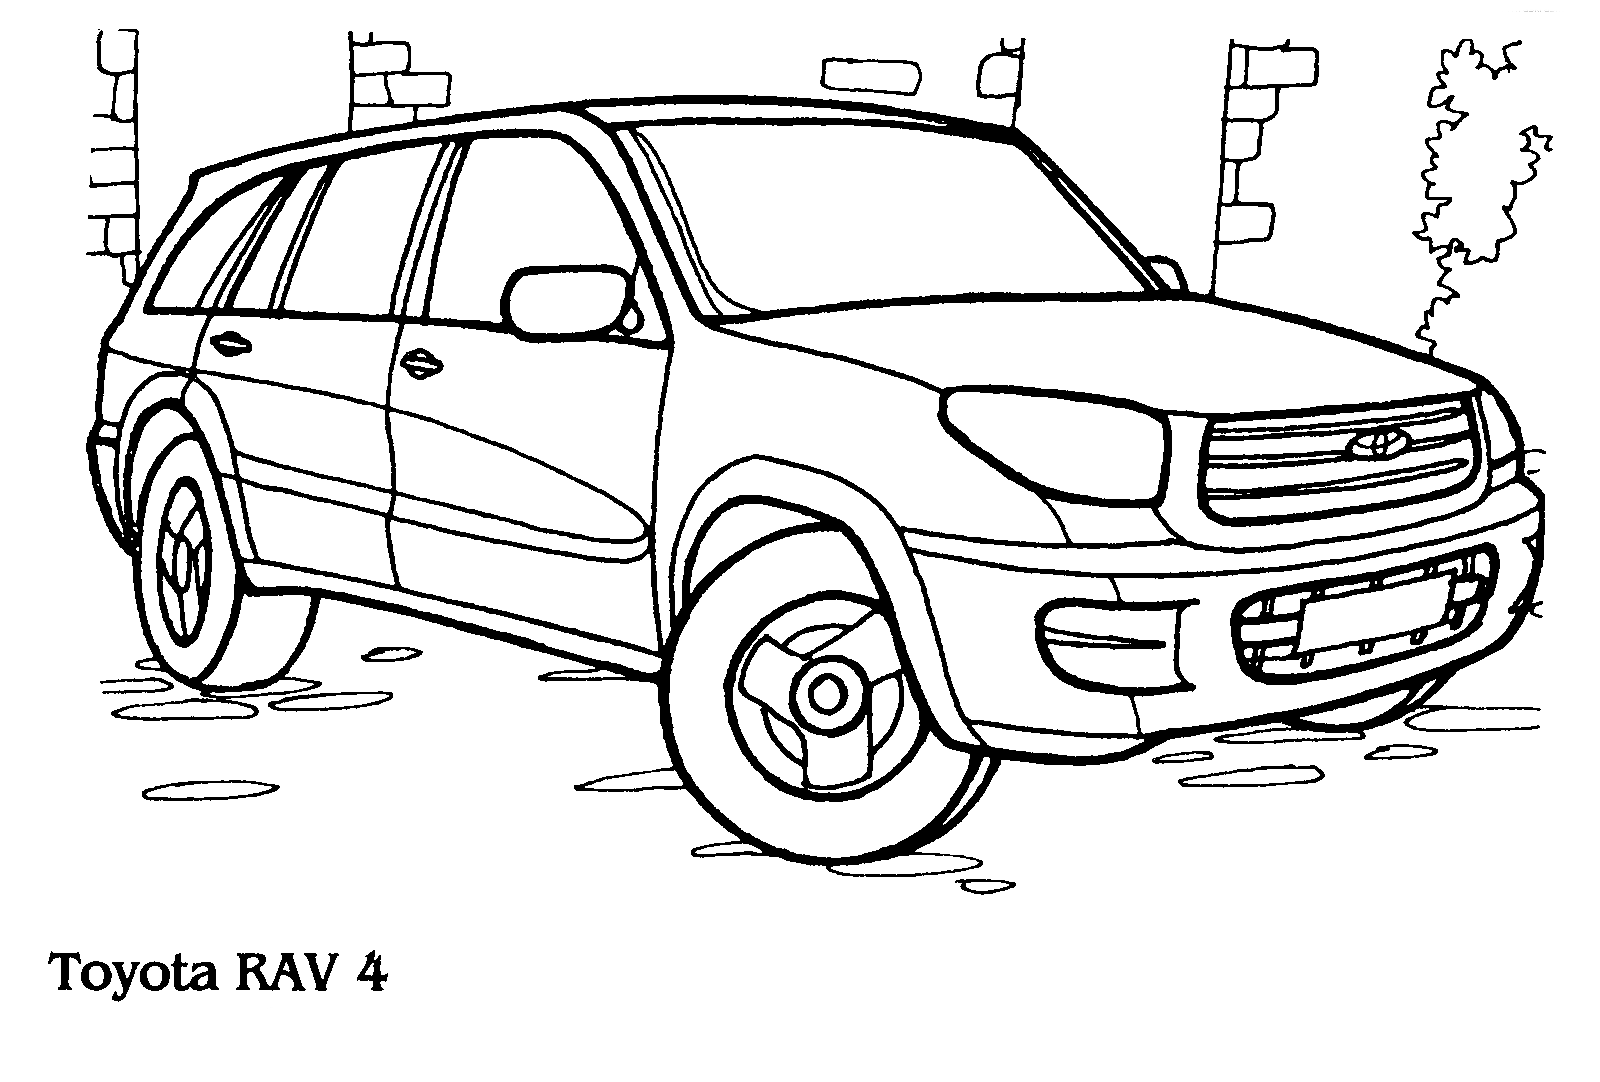 Coloring page - Toyota RAV4